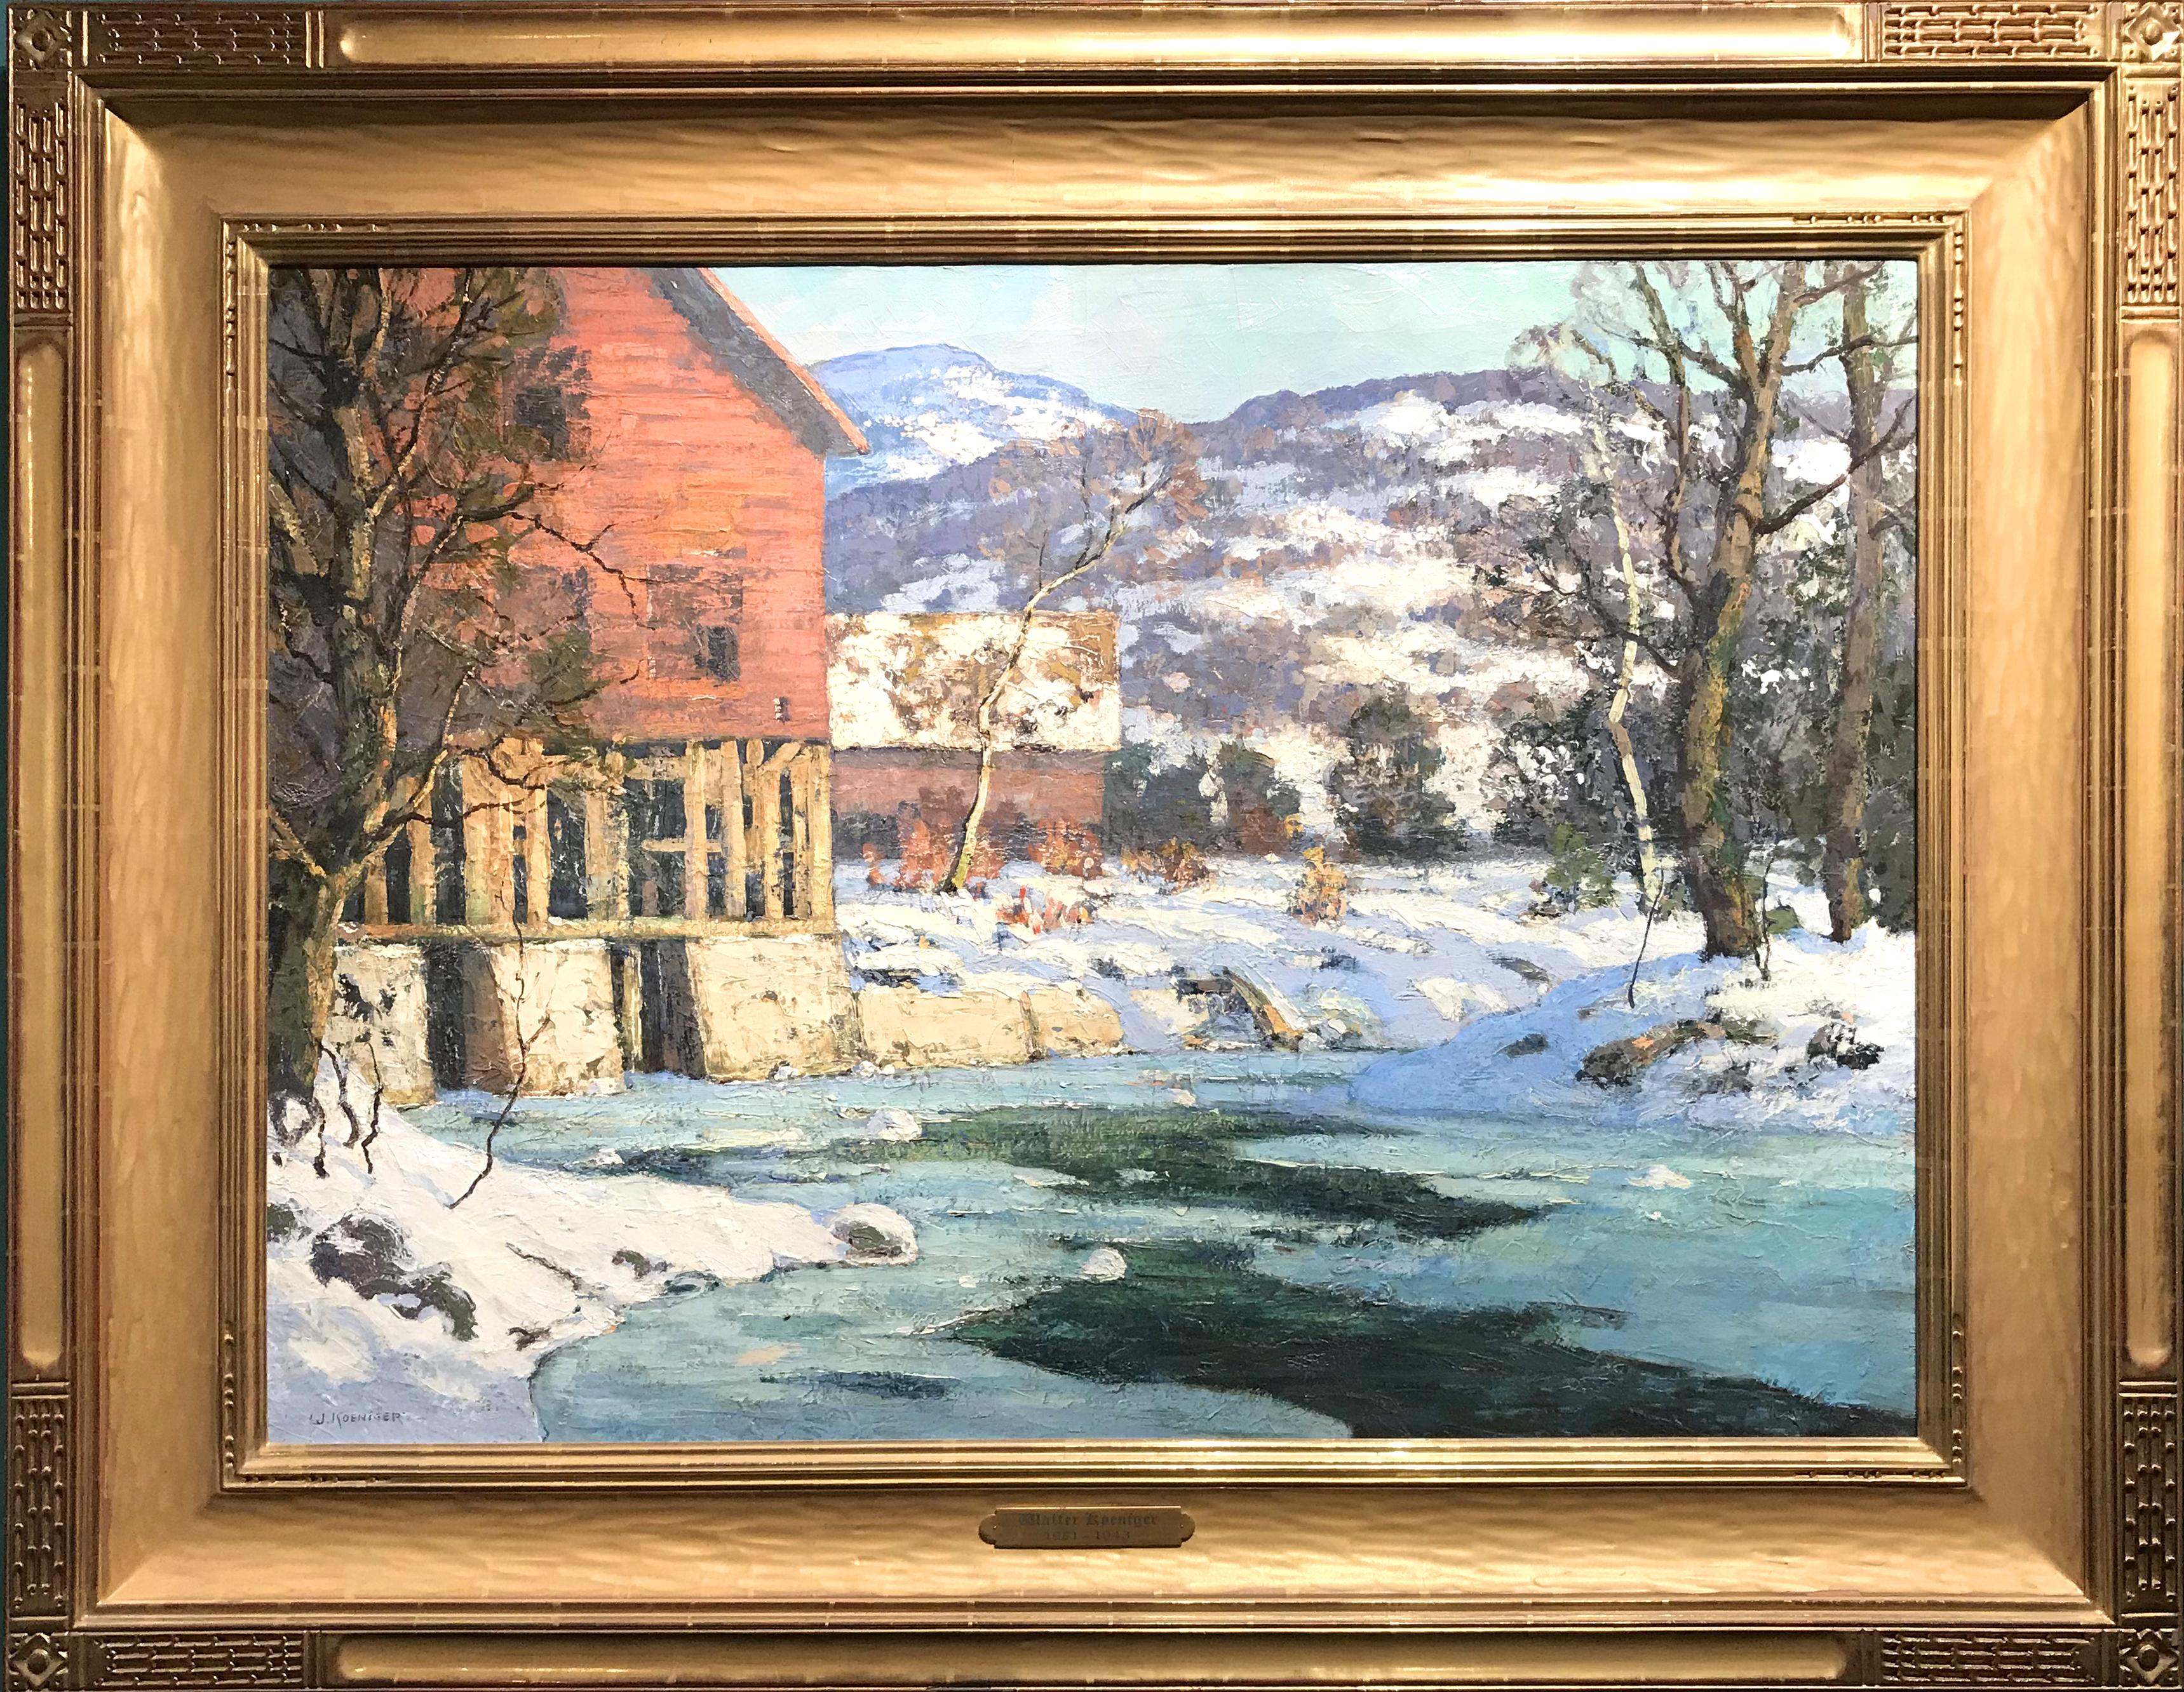 Landscape Painting Walter Koeniger - Moulin d'hiver